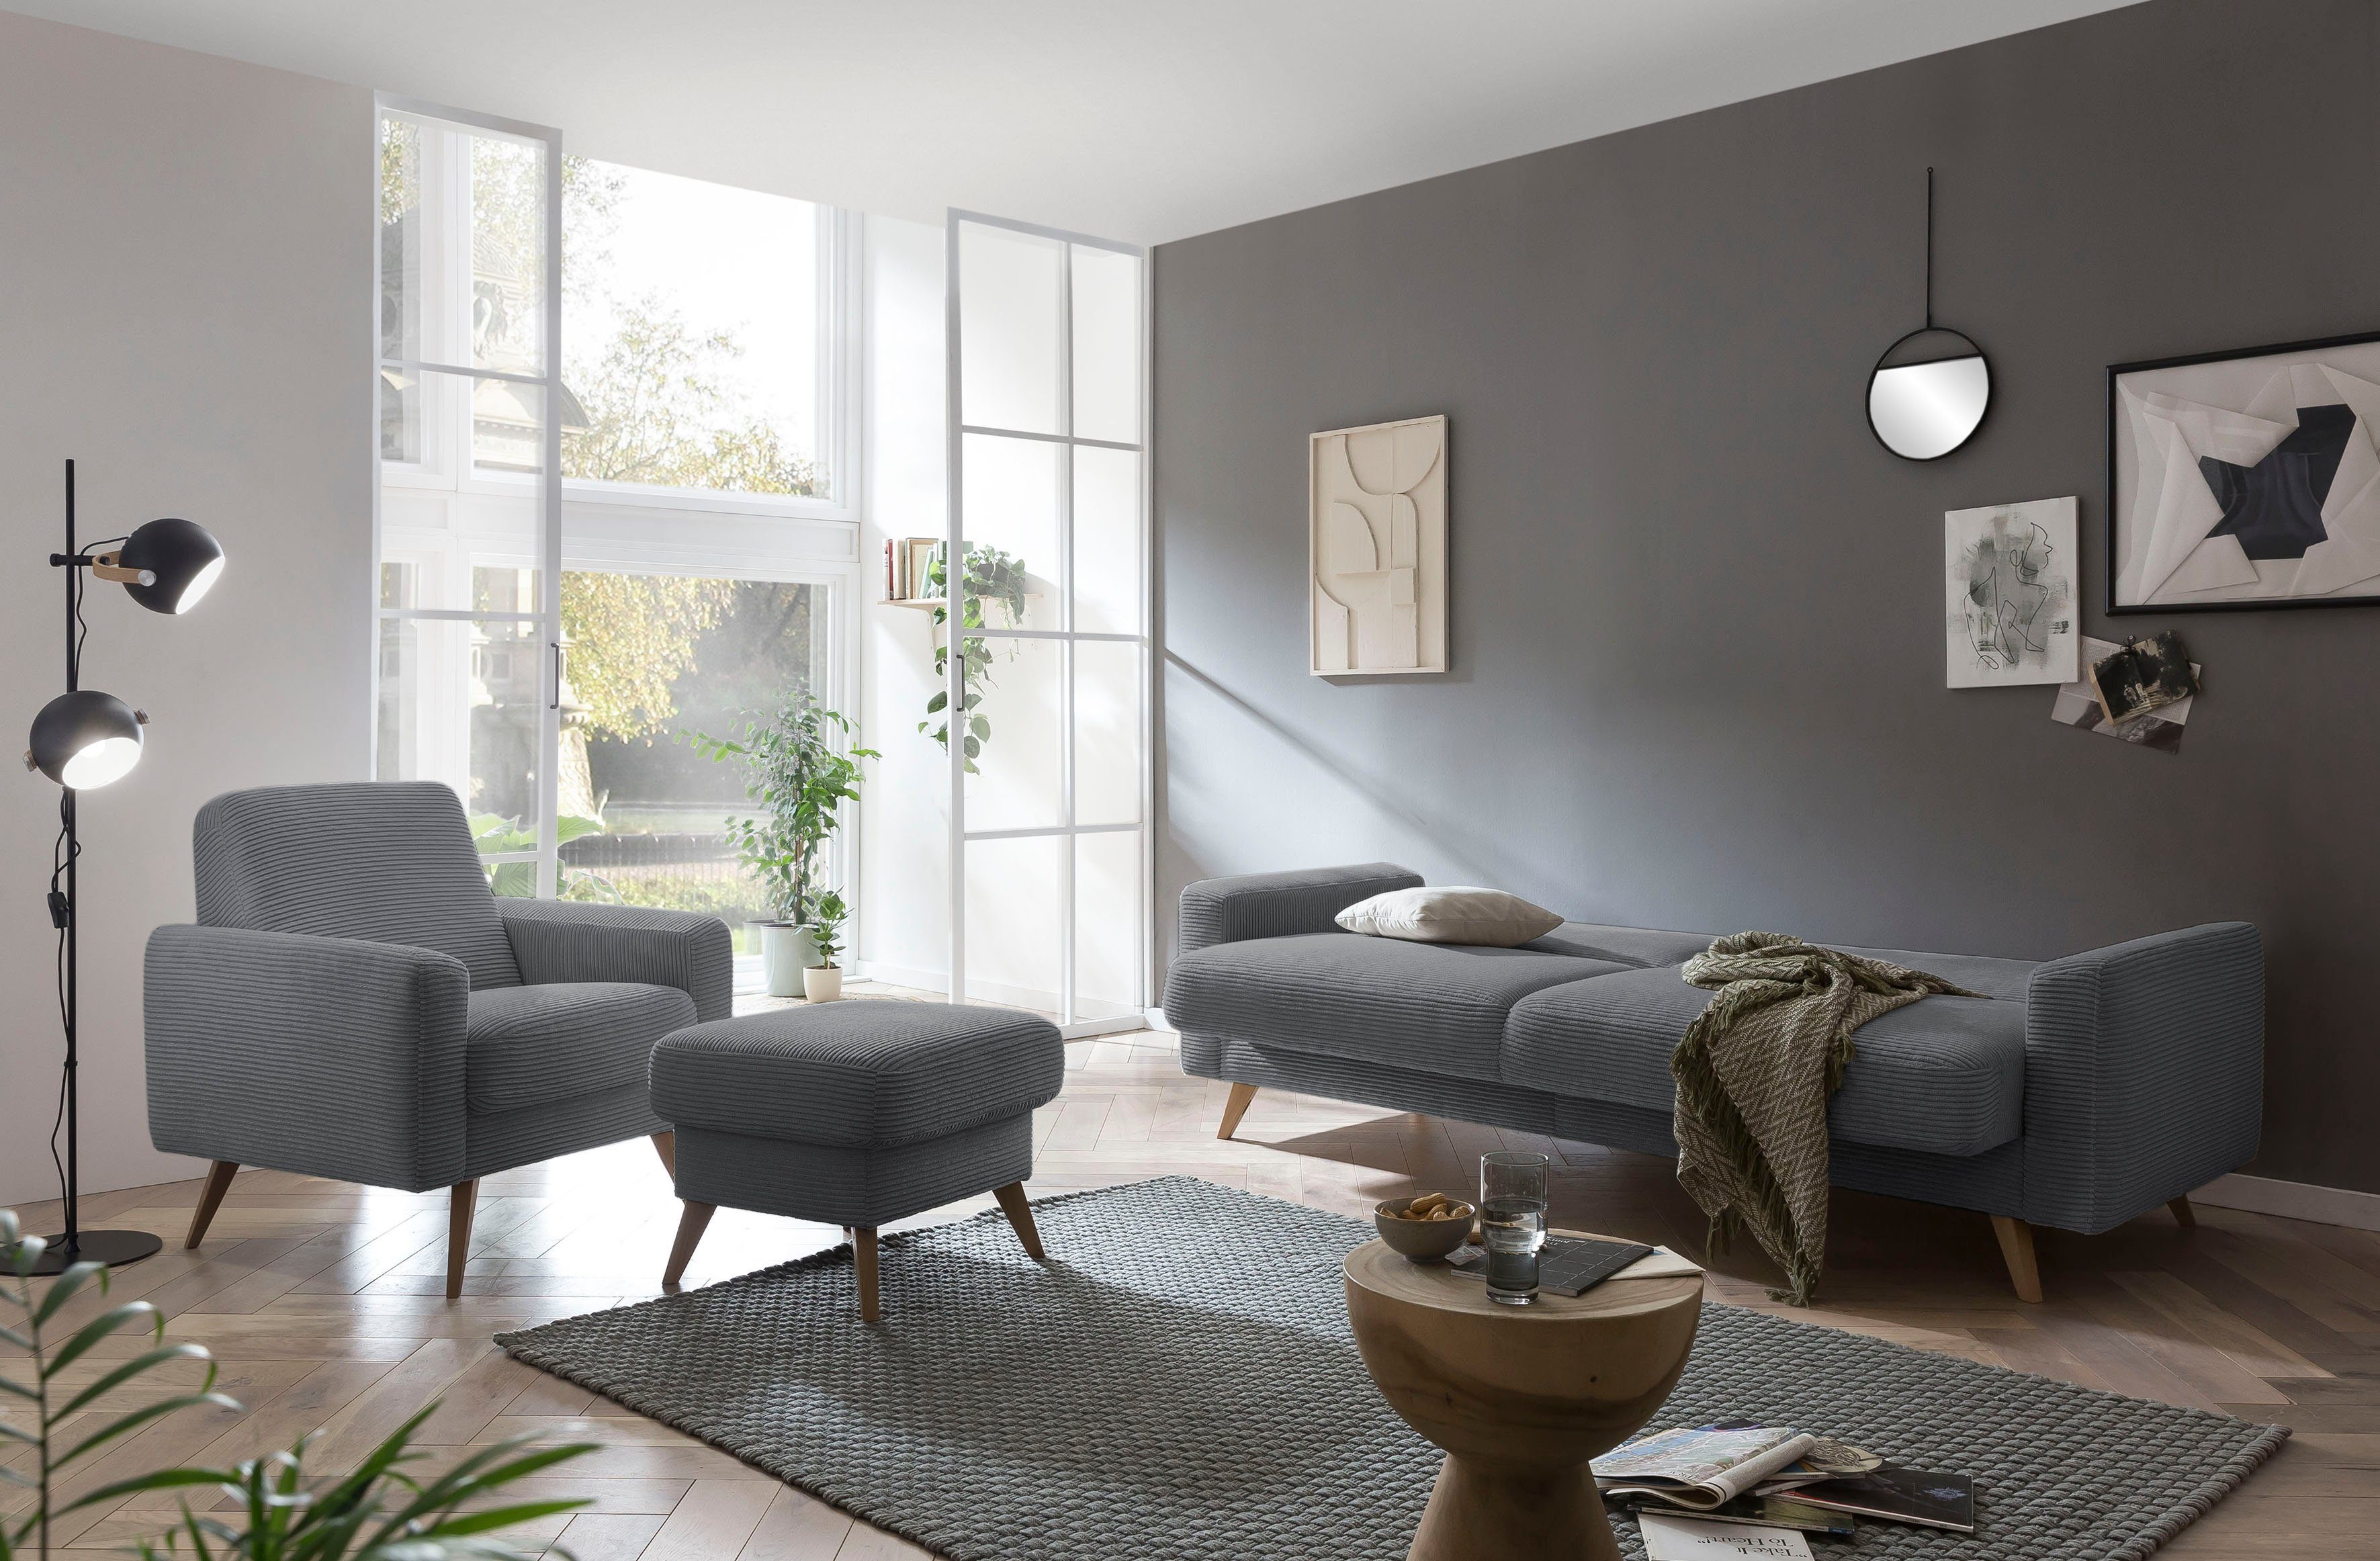 exxpo - sofa fashion grey 3-Sitzer Inklusive Bettfunktion Samso, und Bettkasten